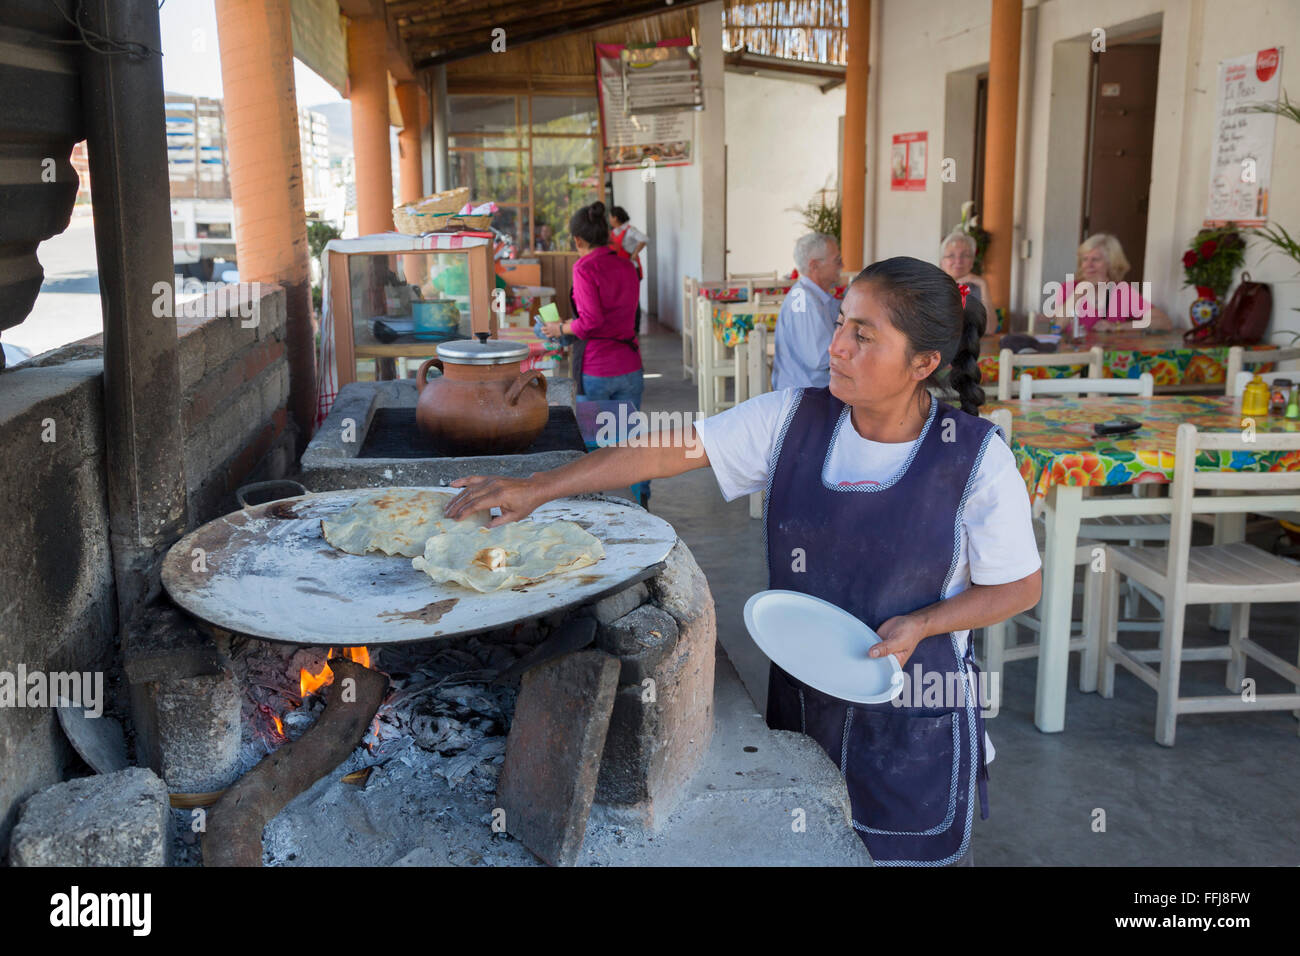 https://c8.alamy.com/comp/FFJ8FW/santiago-matatln-oaxaca-mexico-a-restaurant-worker-makes-the-large-FFJ8FW.jpg